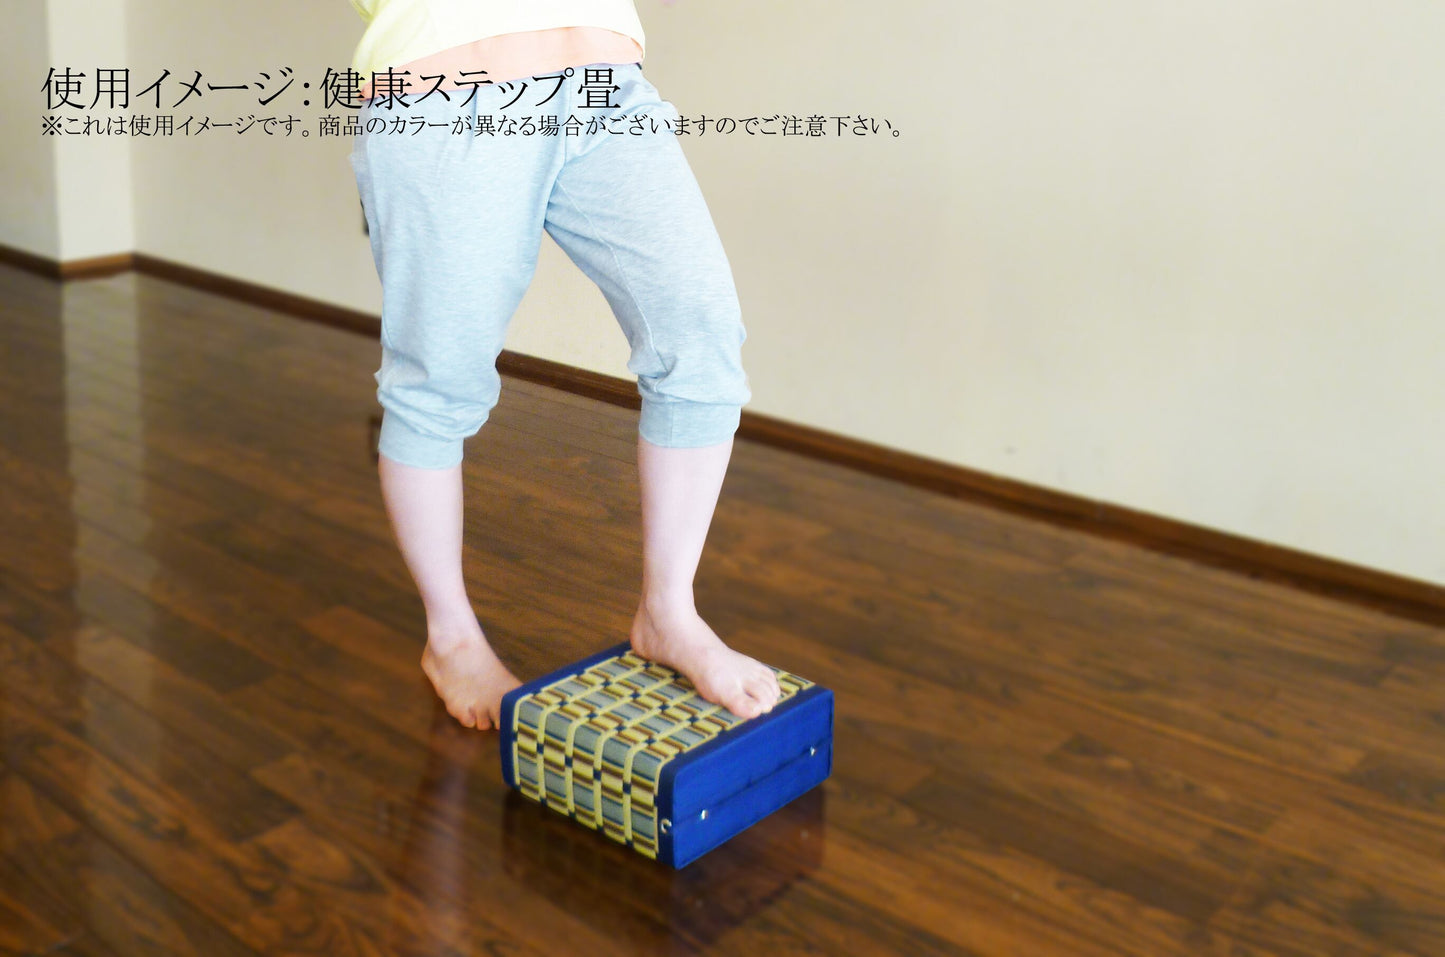 Exercise steps (Japanese-made tatami)